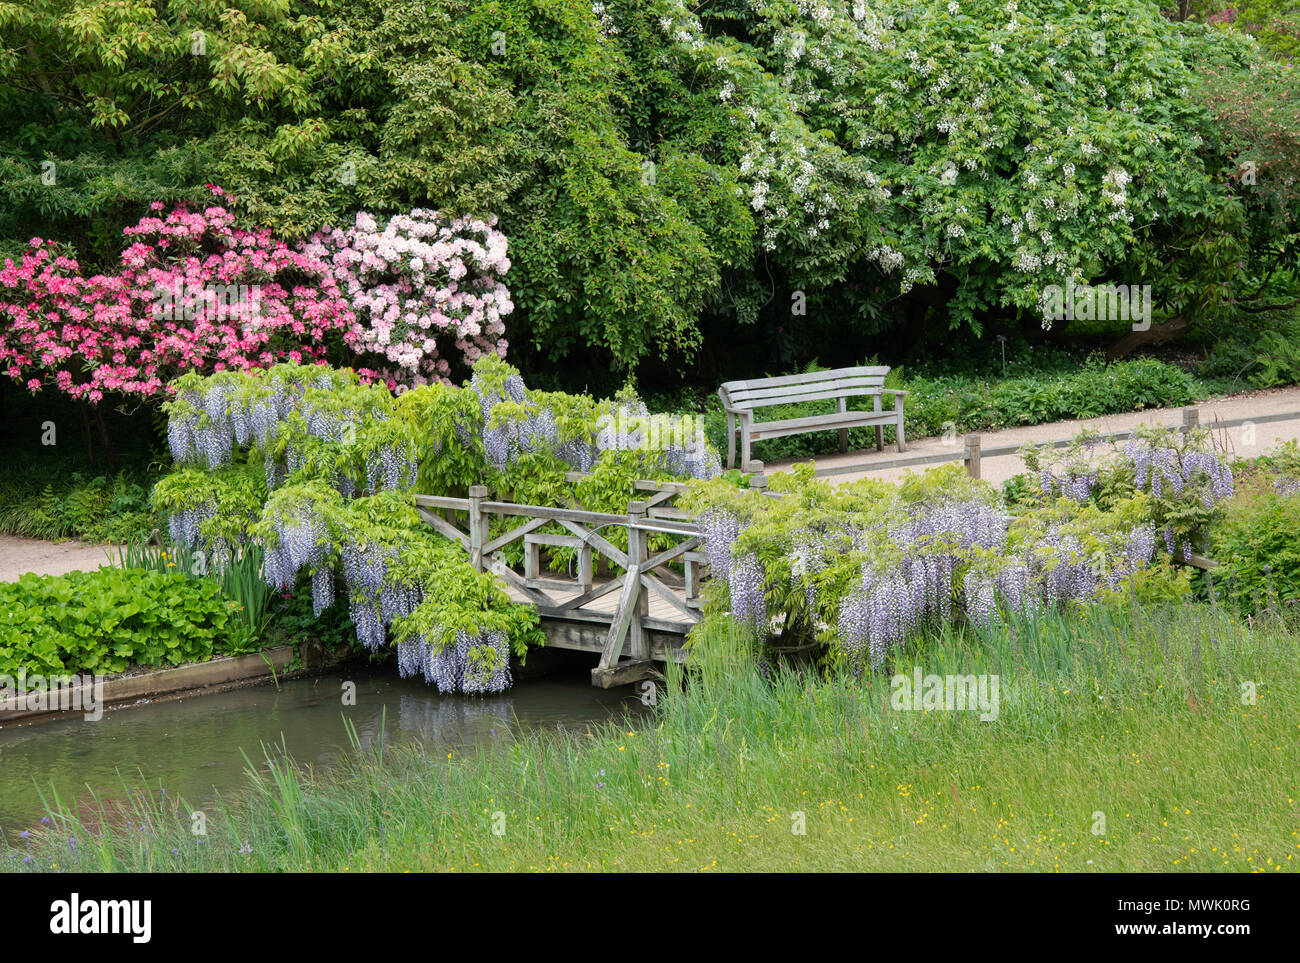 Wisteria Floribunda covering a wooden foot bridge at RHS Wisley Gardens, Surrey, England Stock Photo